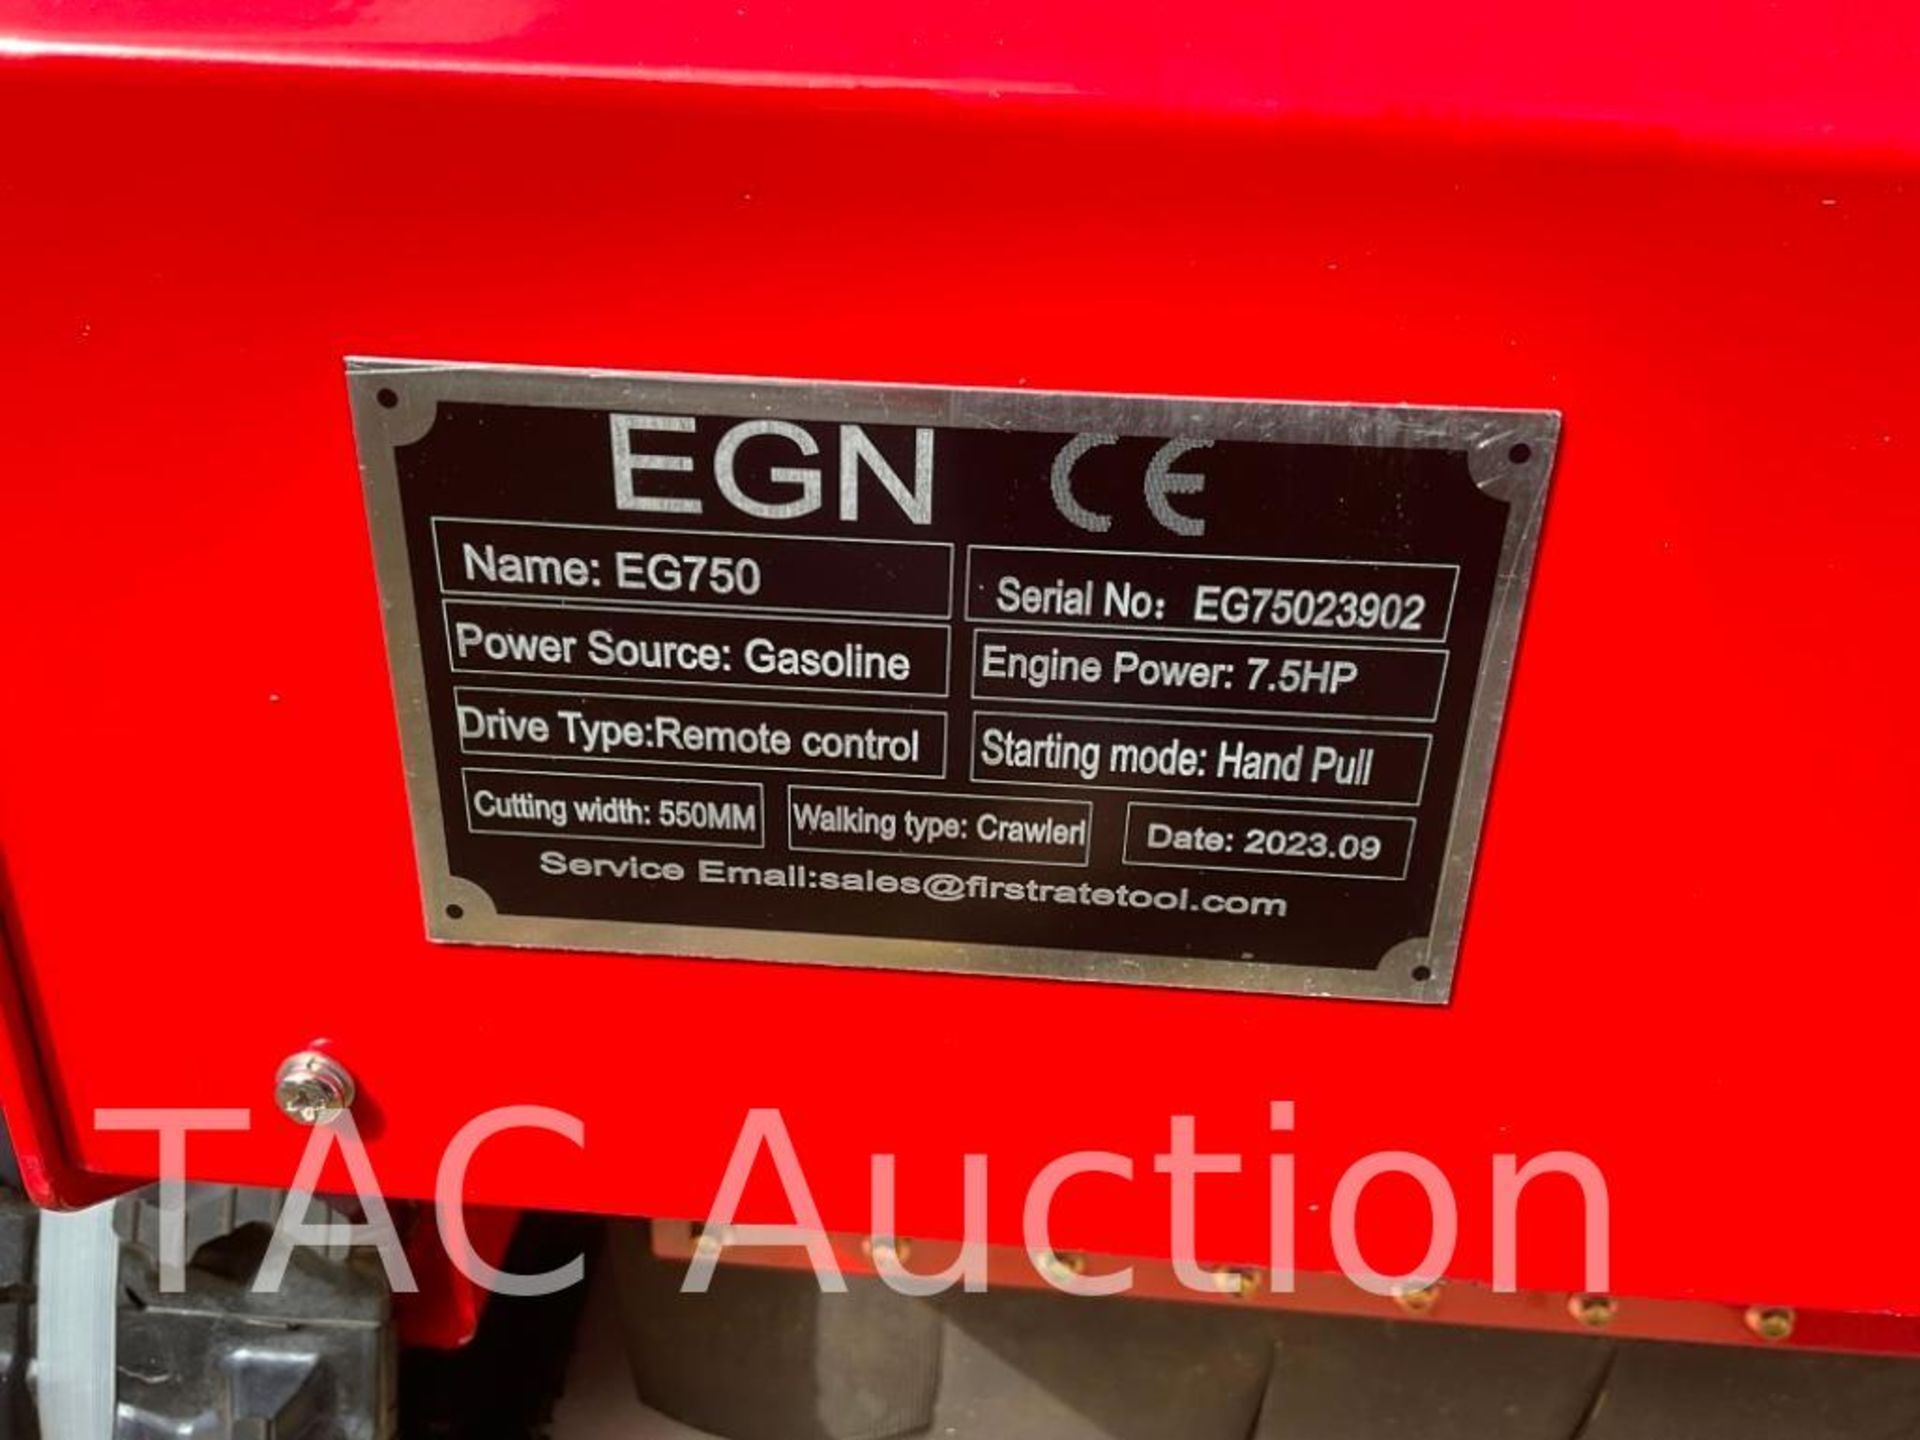 New EGN EG750 Crawler Remote Control Lawn Mower - Image 7 of 8